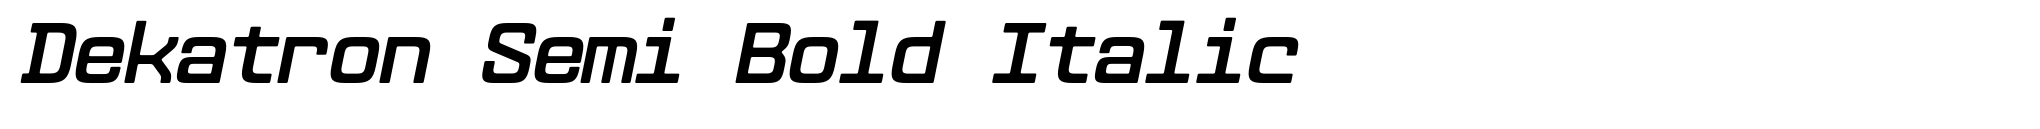 Dekatron Semi Bold Italic image